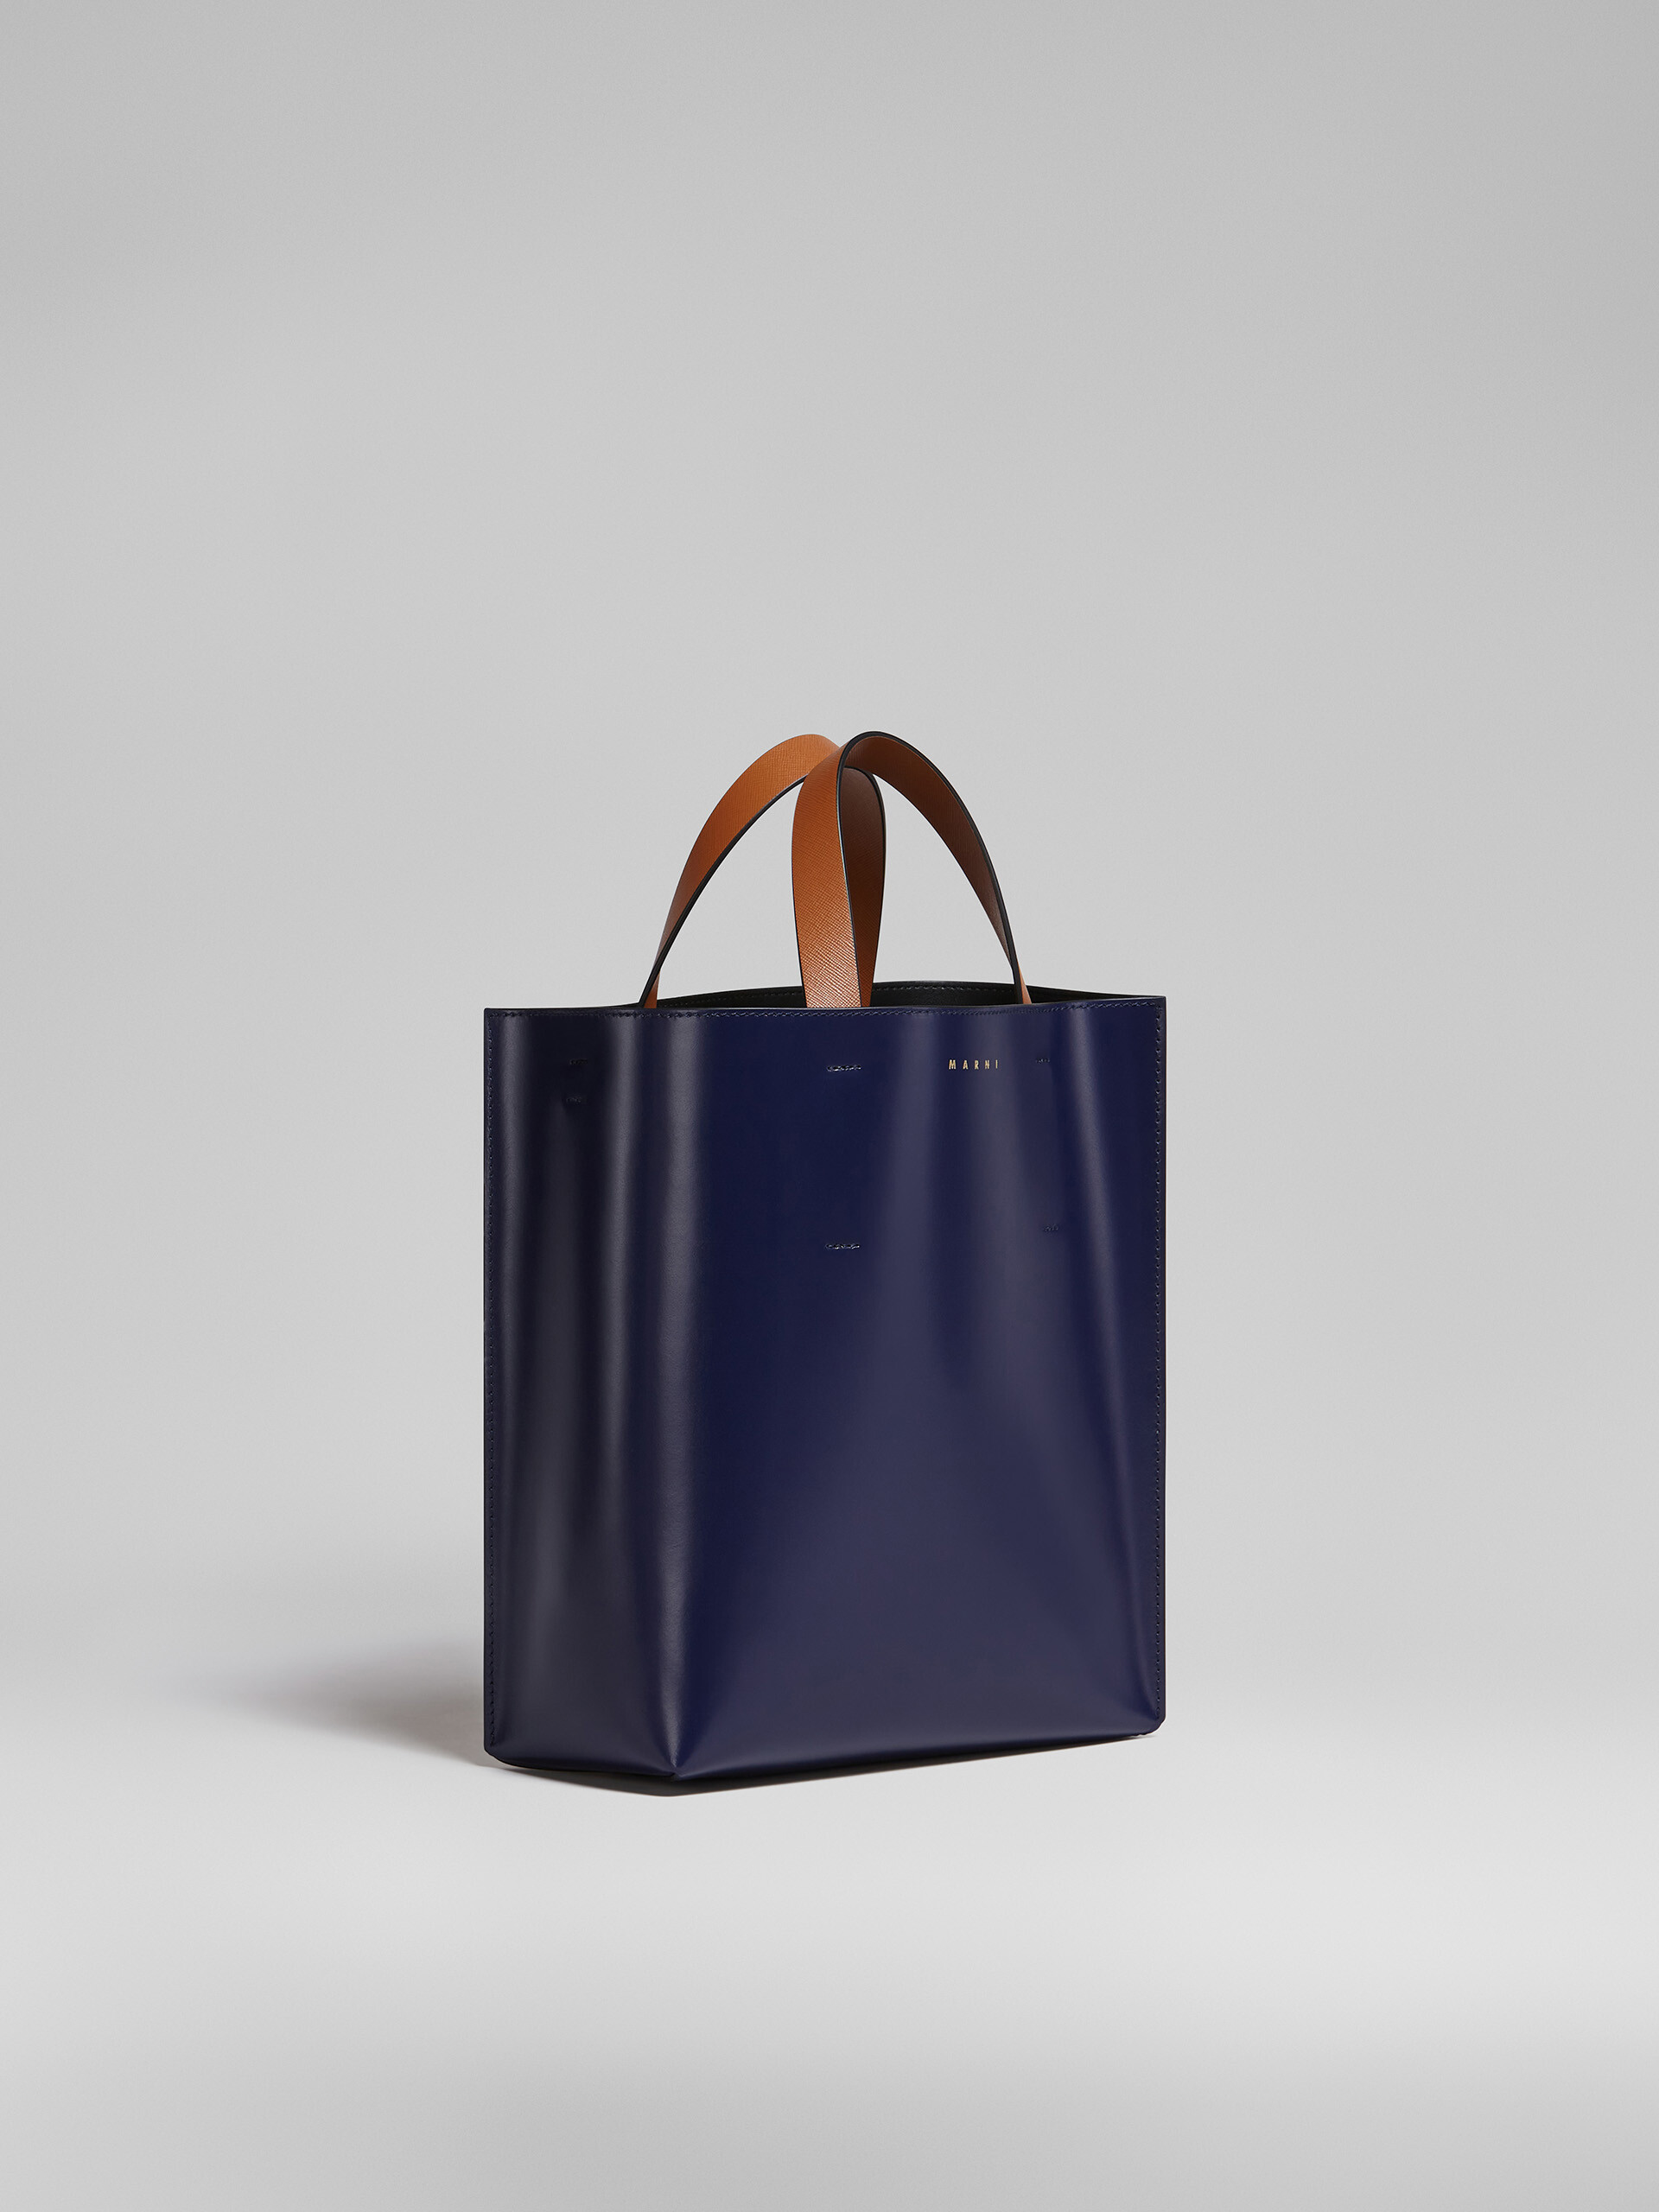 Petit sac MUSEO en cuir bleu et blanc - Sacs cabas - Image 6